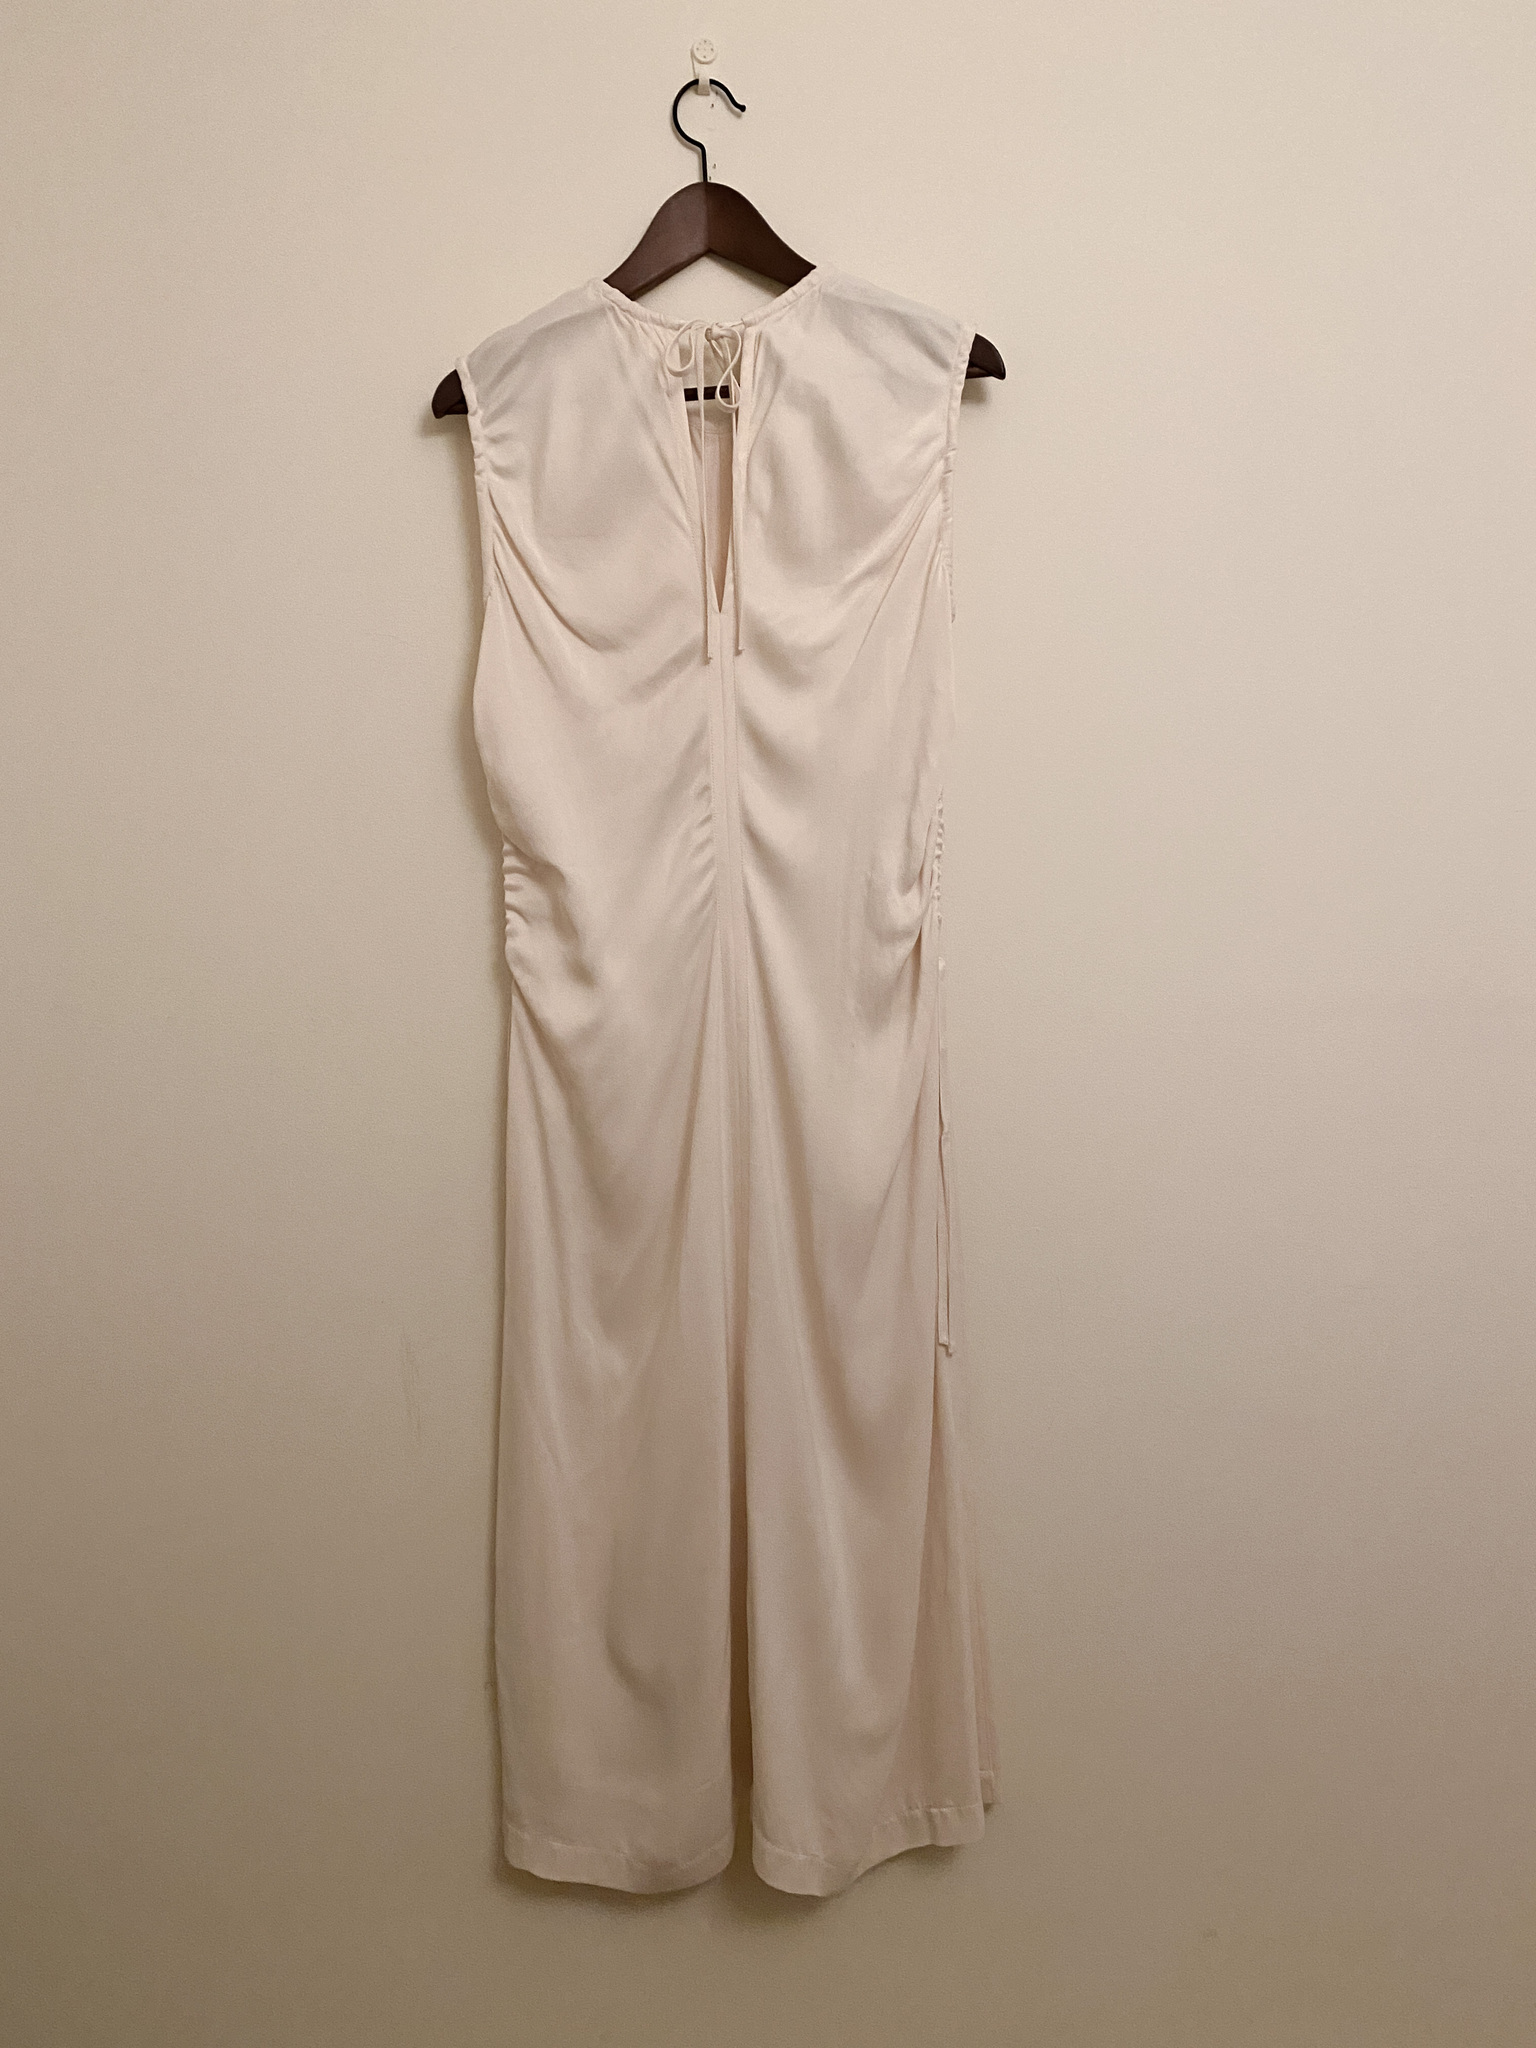 ARKET White Silky Viscose Dress (40)